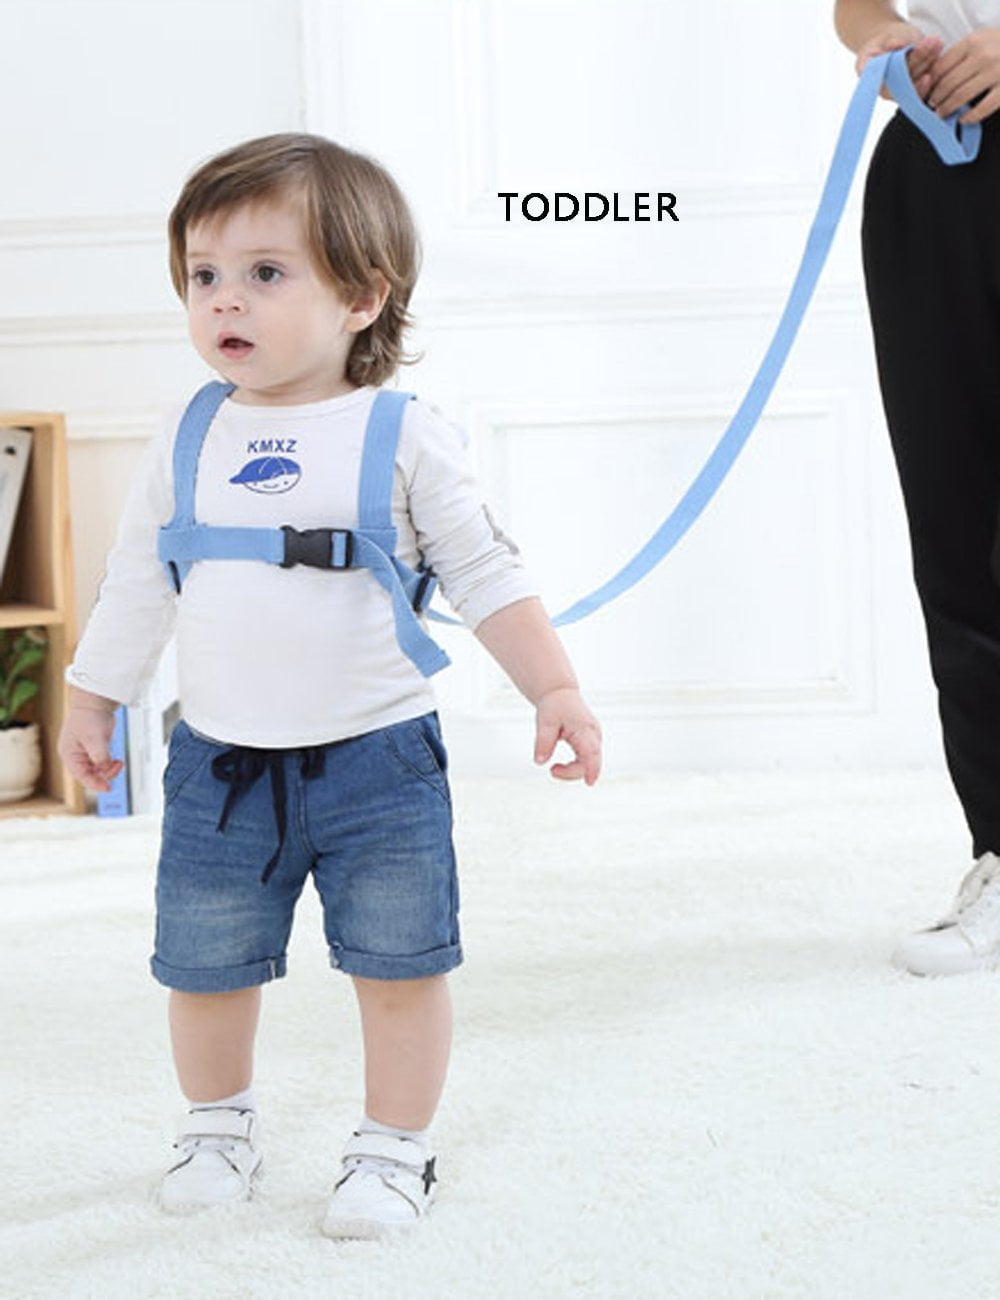 Auchen Baby Safety walking Harness - Child Toddler Walking Anti